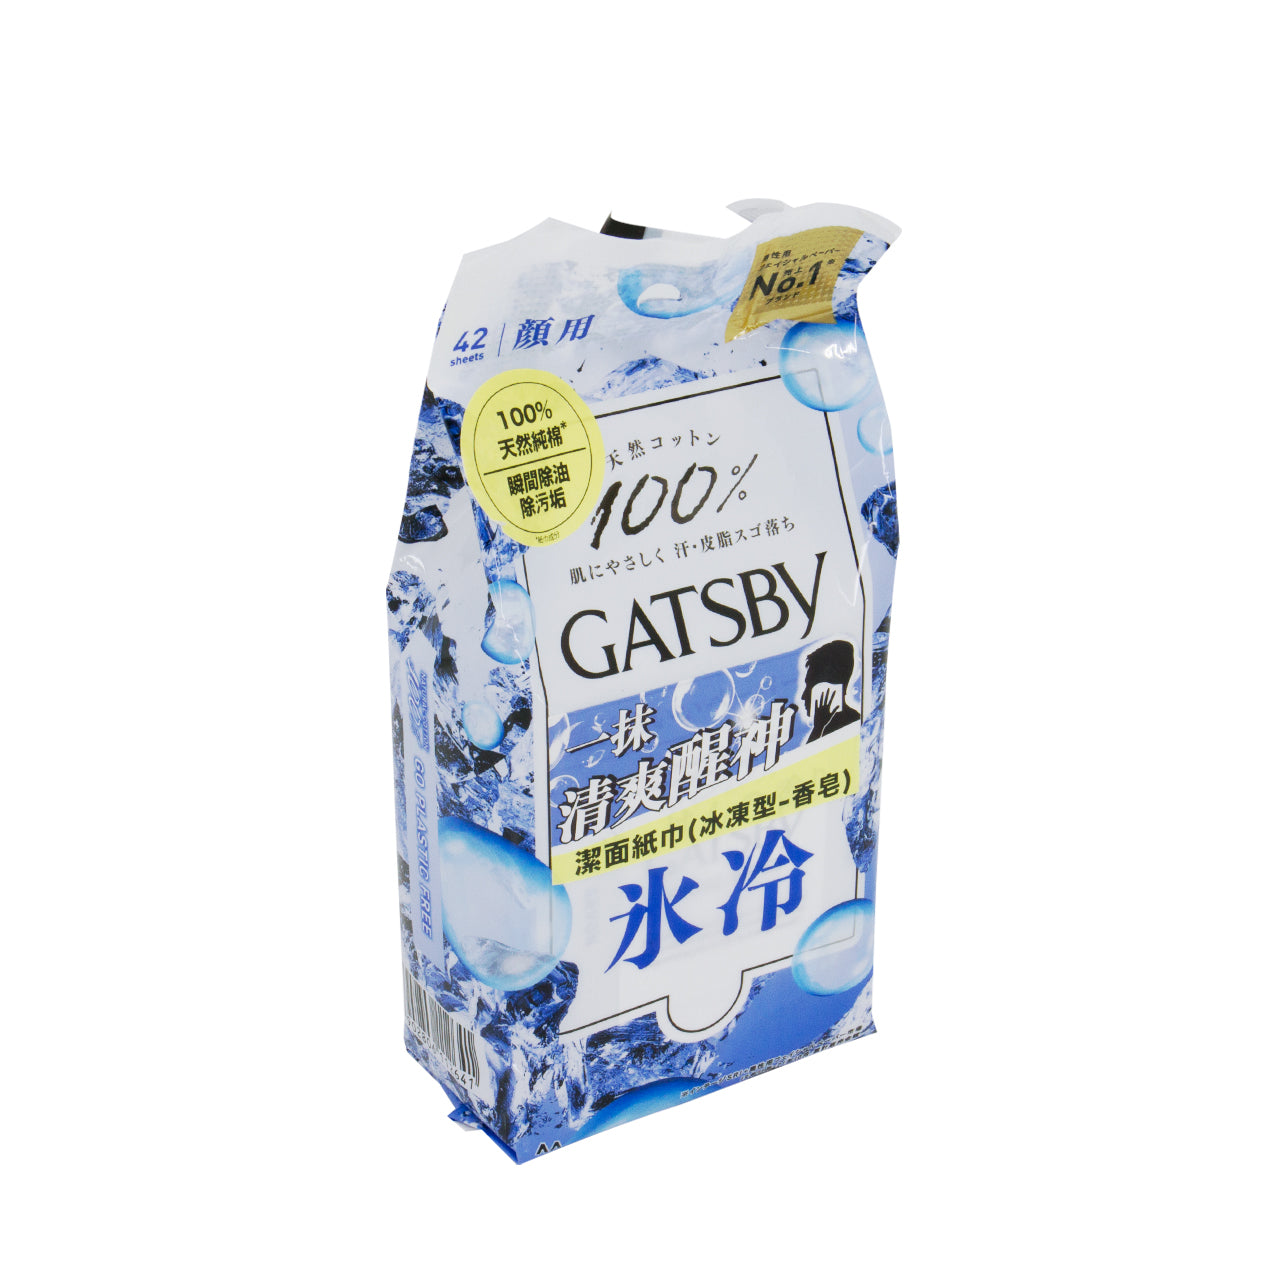 Gatsby Facial Paper Ice-Type Box Savon Scent 42PCS | Sasa Global eShop